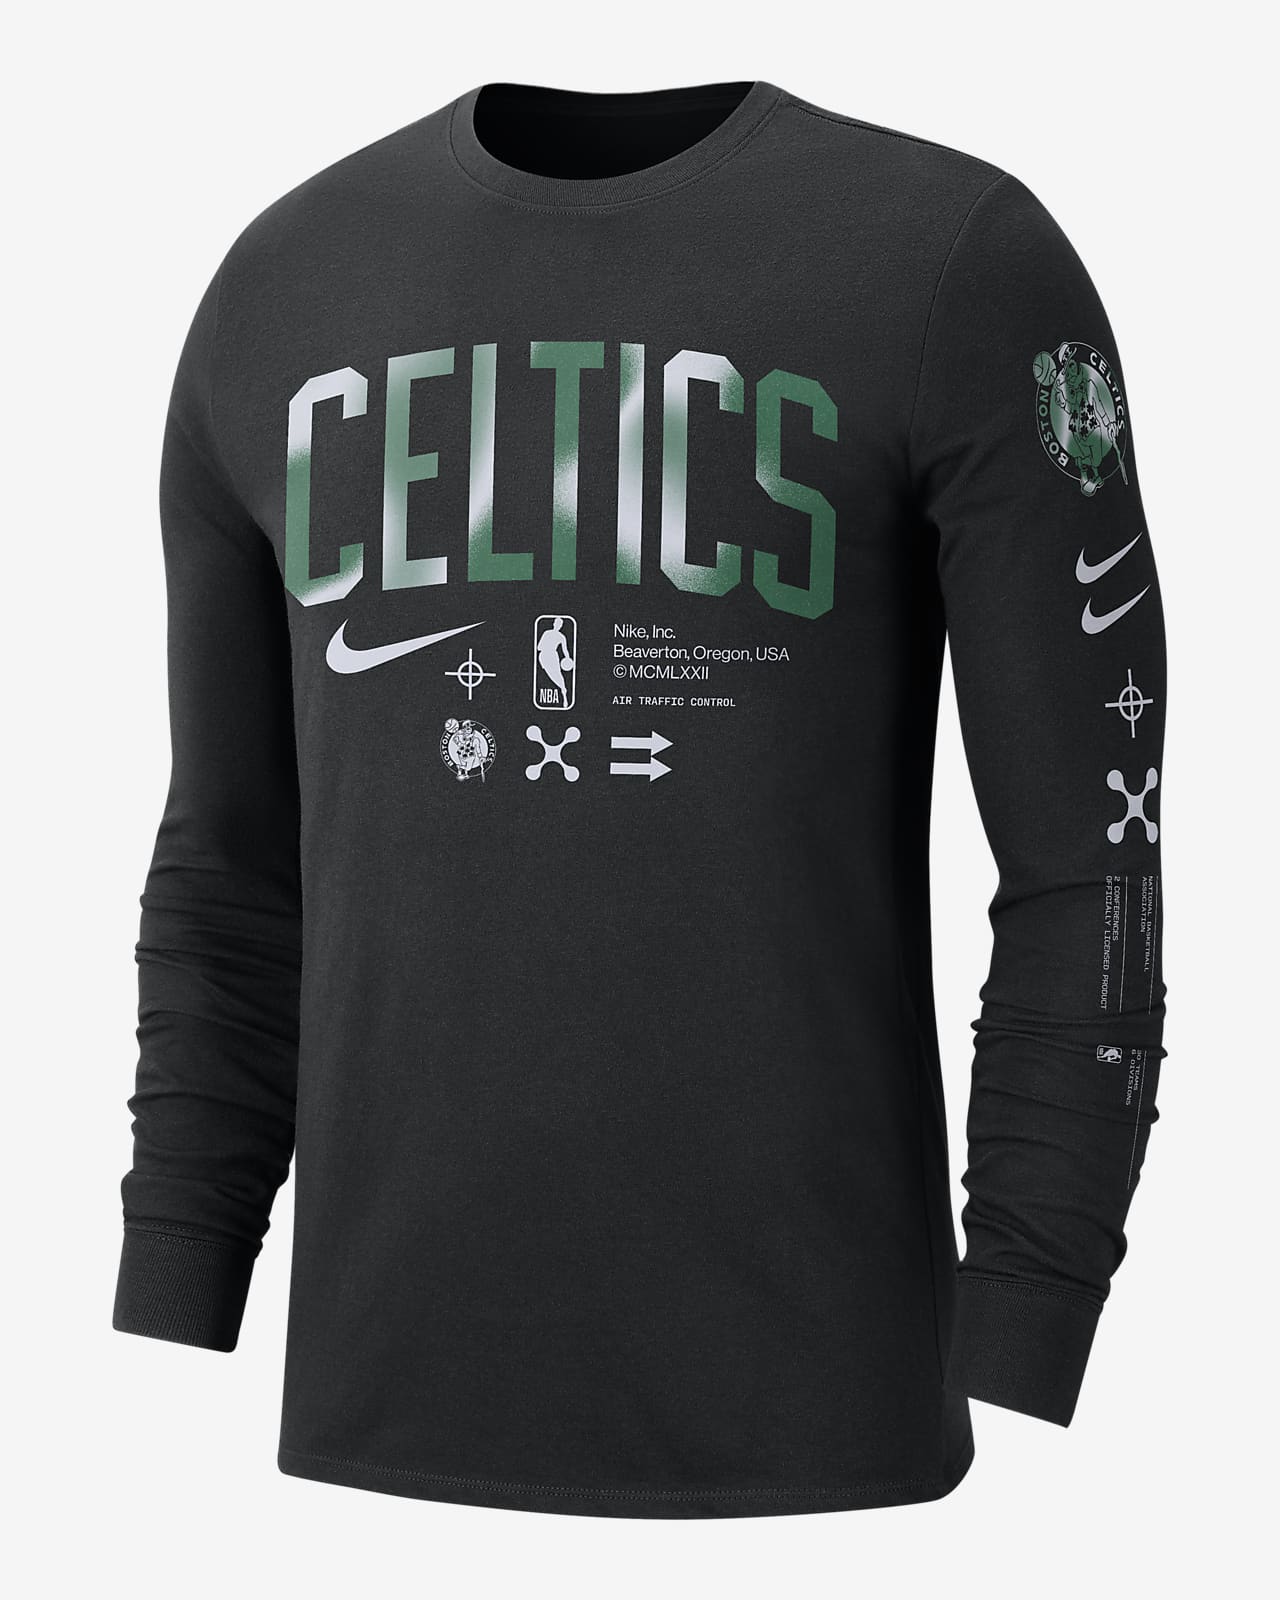 celtics shirts for men